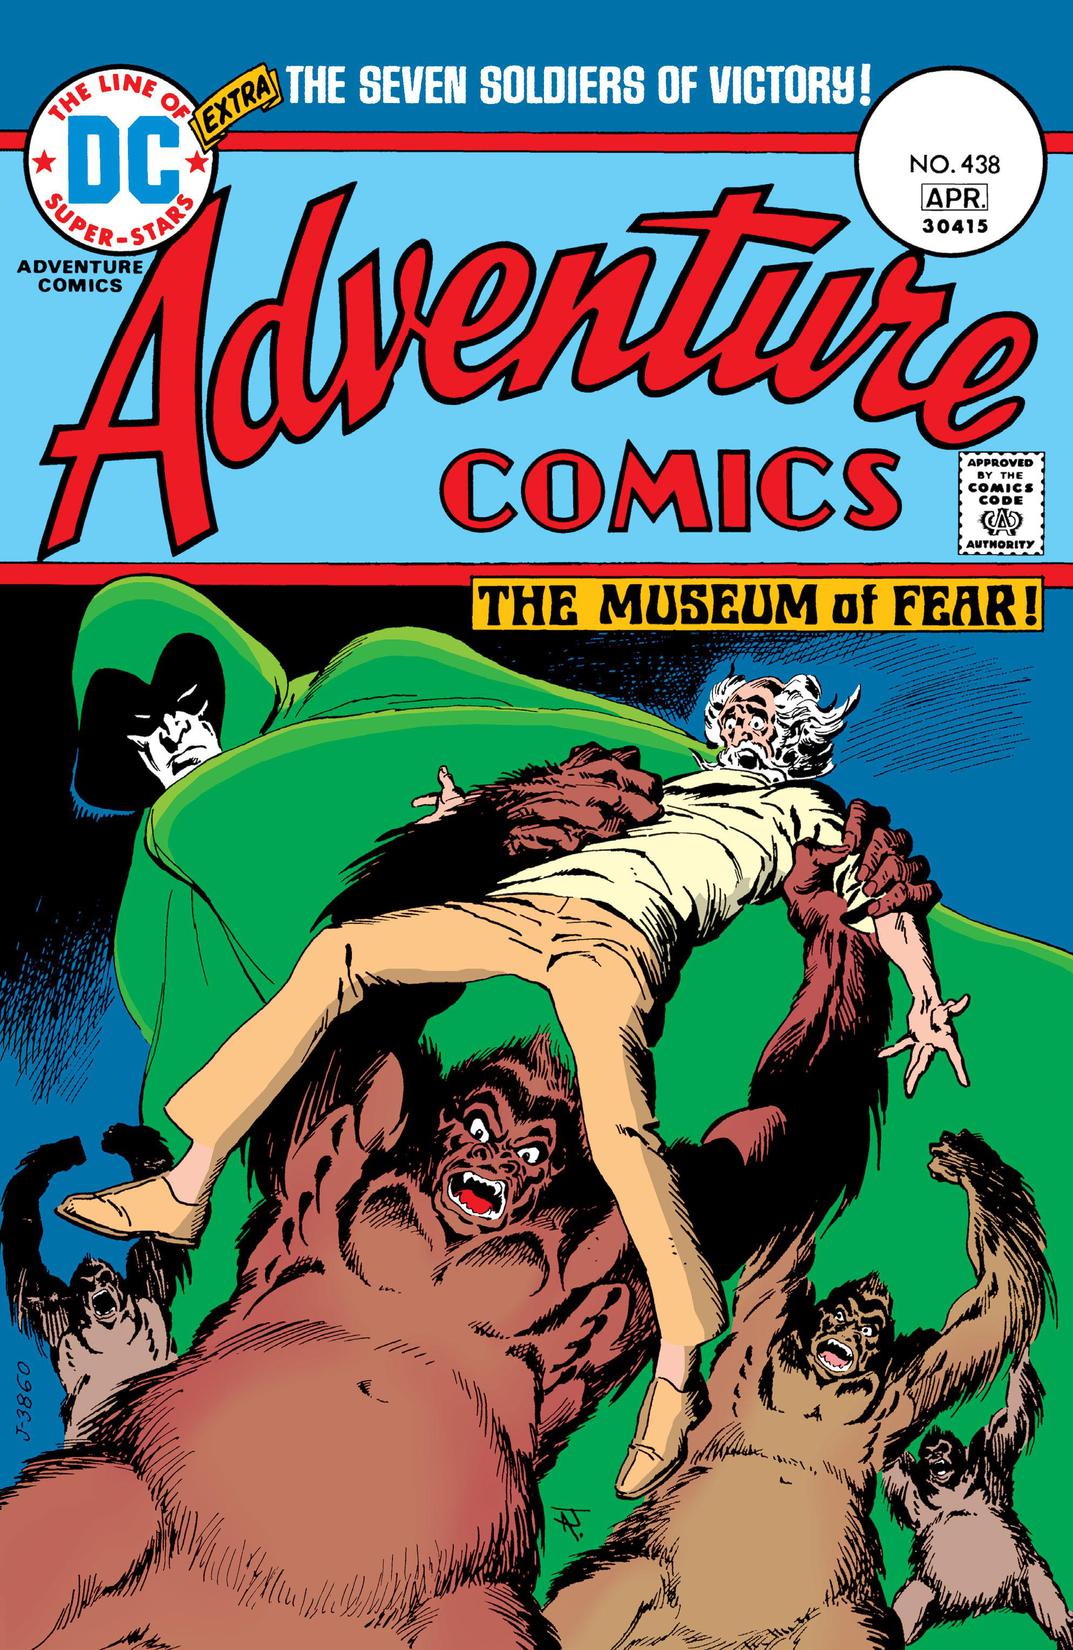 Adventure Comics (1938-) #438 preview images